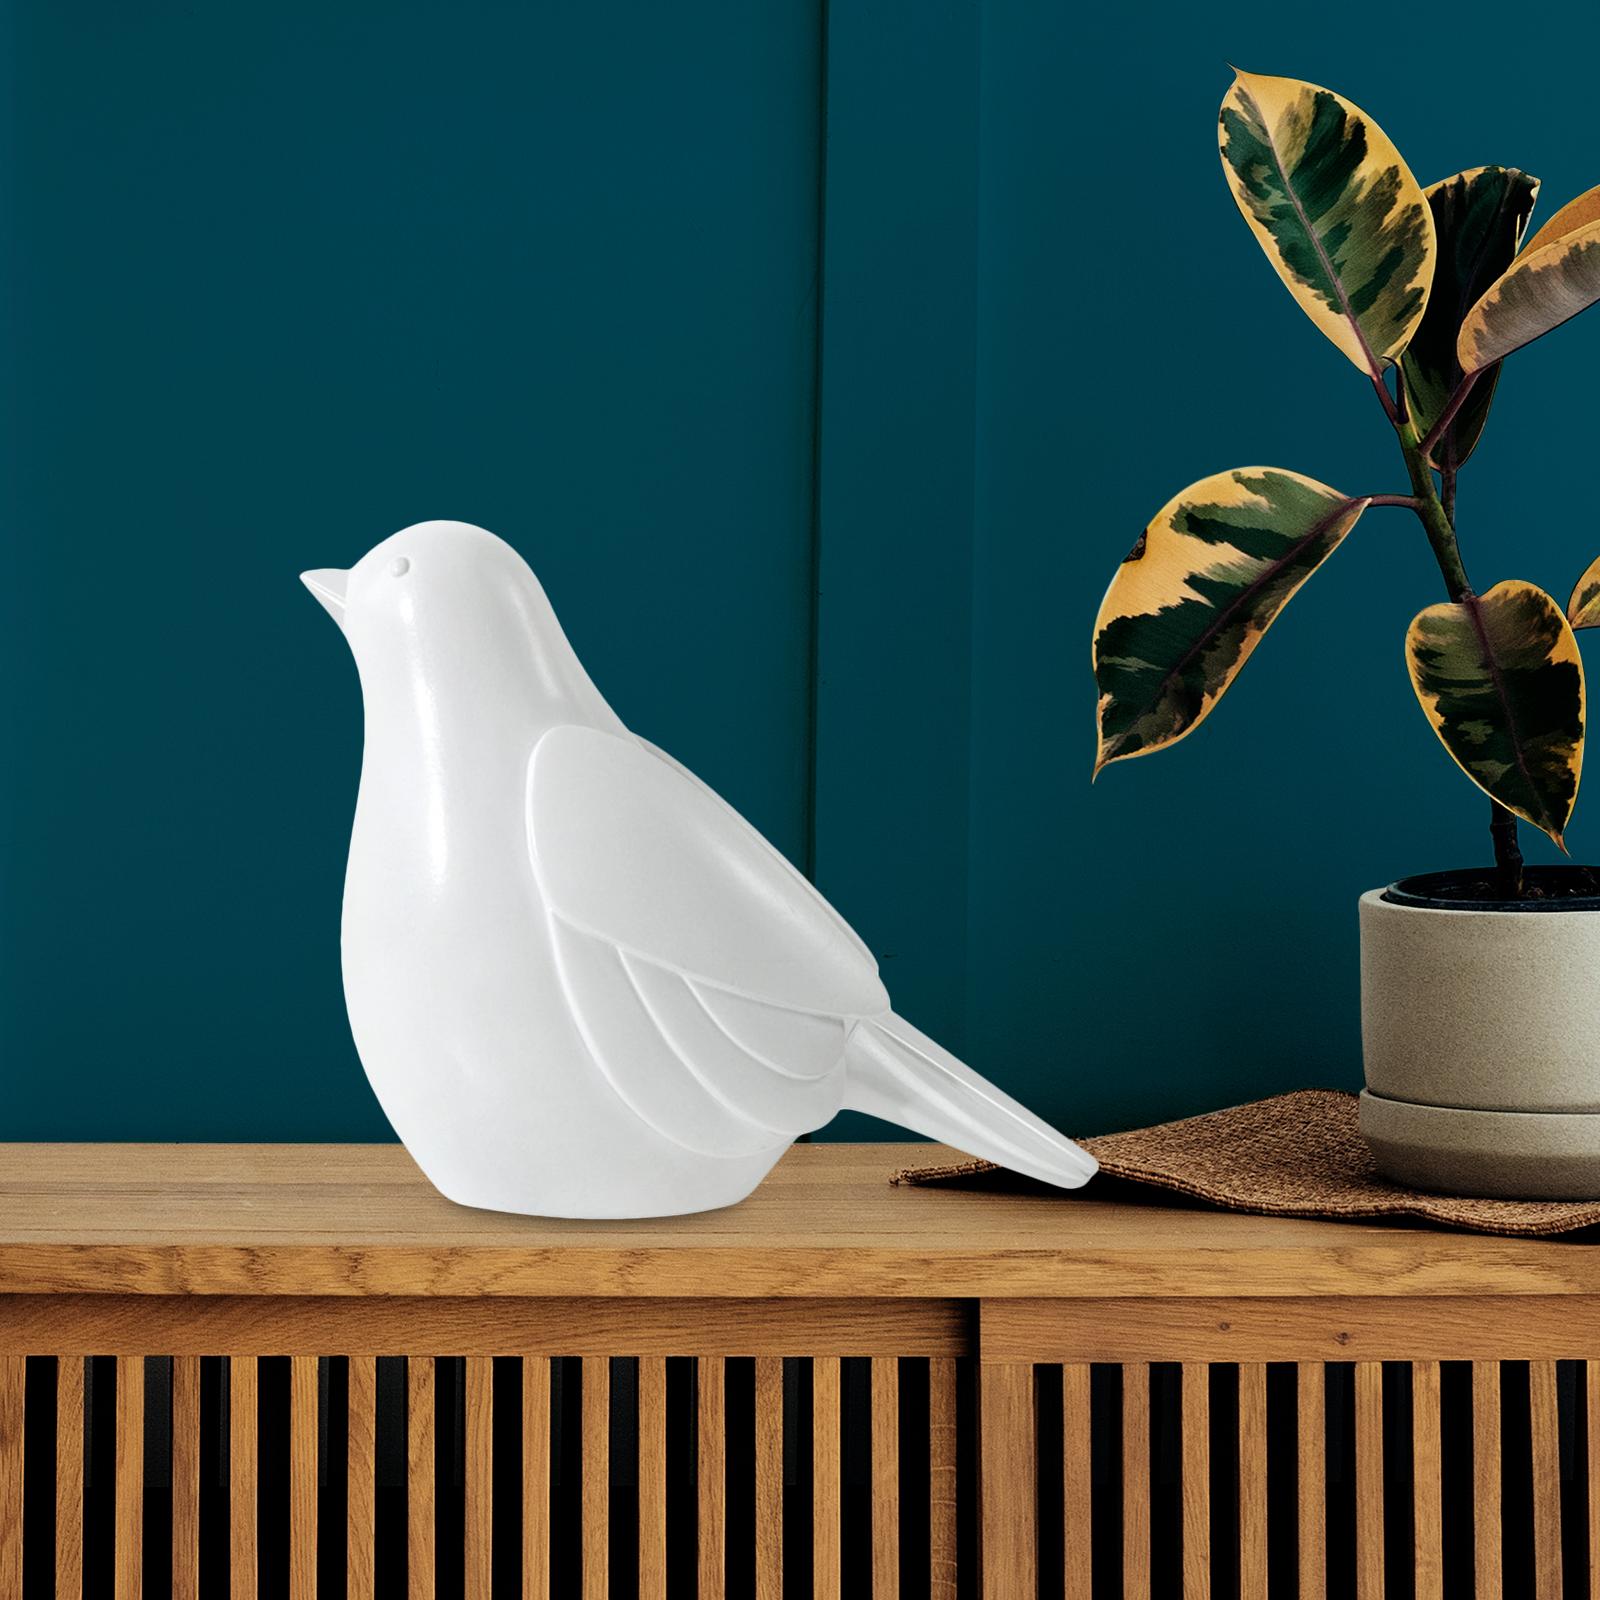 Bird Statue Figurine Shelf Tabletop Home Decor Animal Model White Short Tail